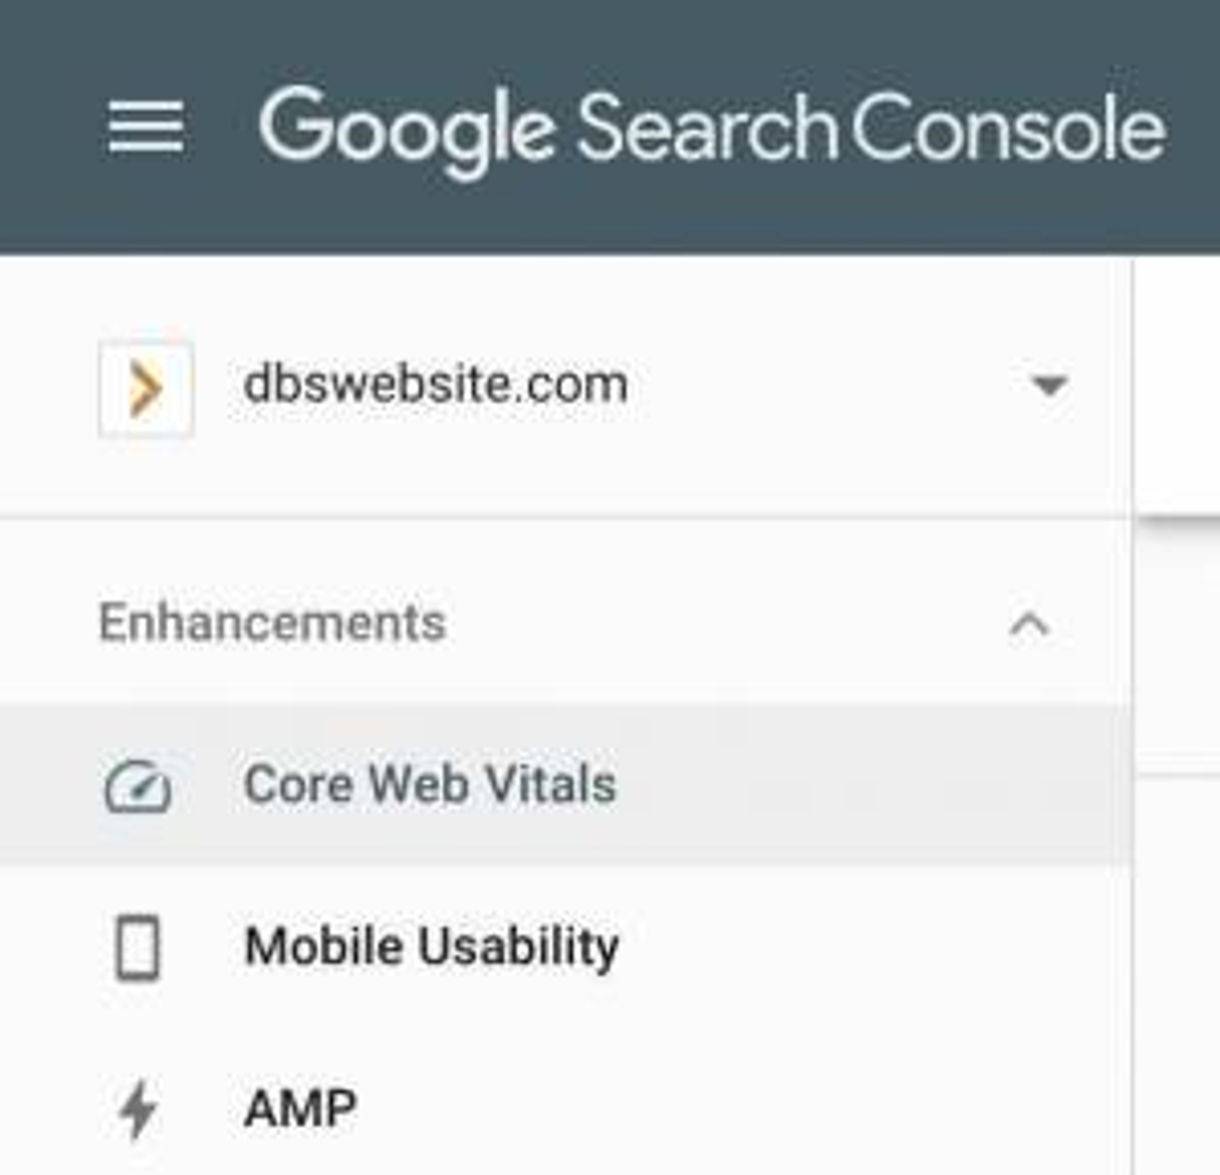 screenshot of Google Search Console dashboard showing Core Web Vitals